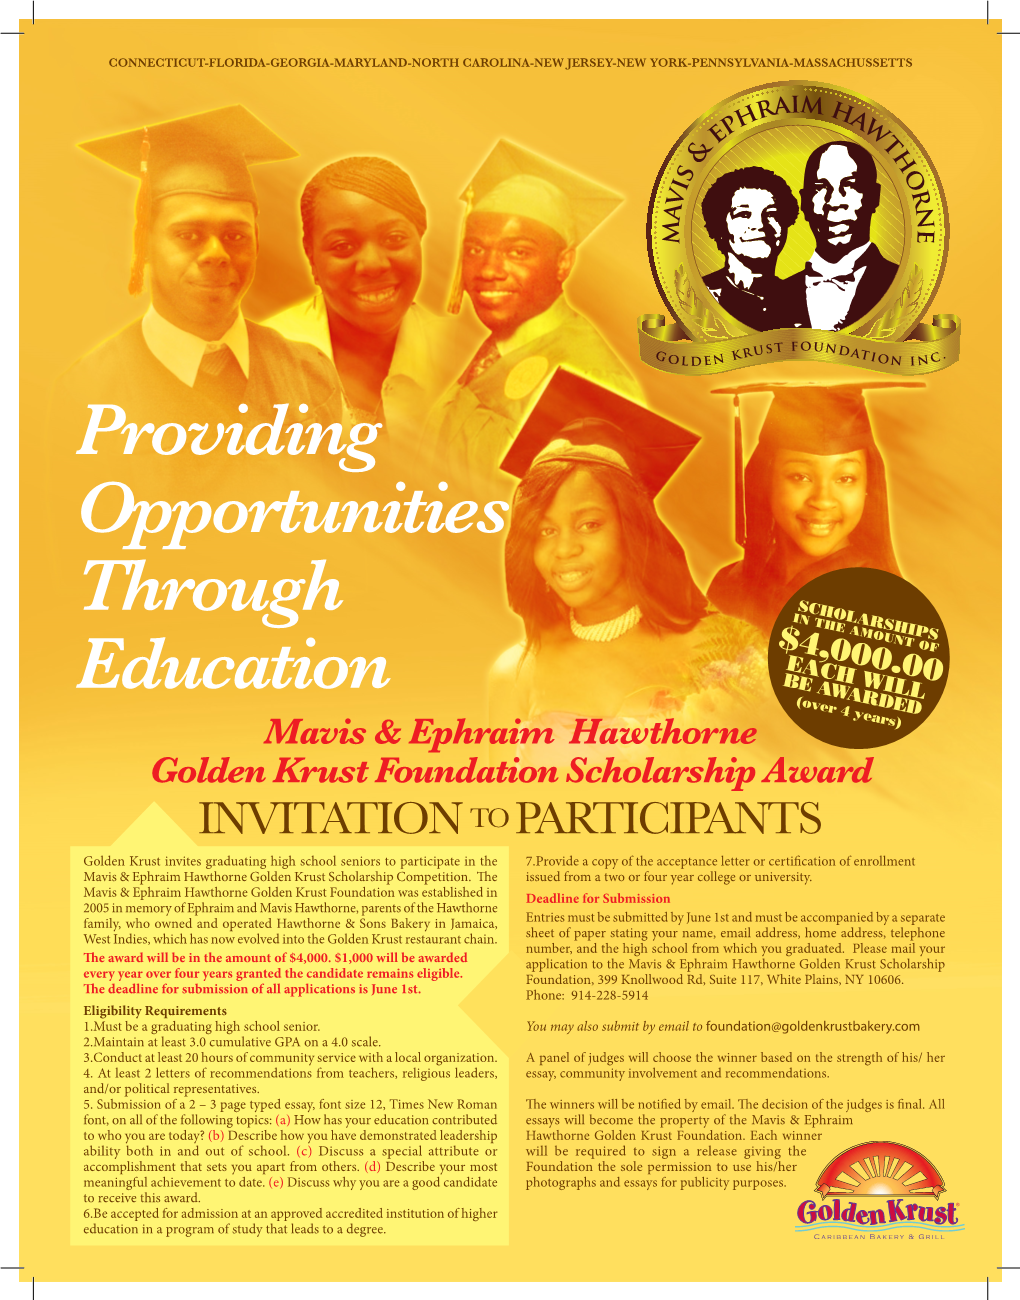 Providing Opportunities Through Education